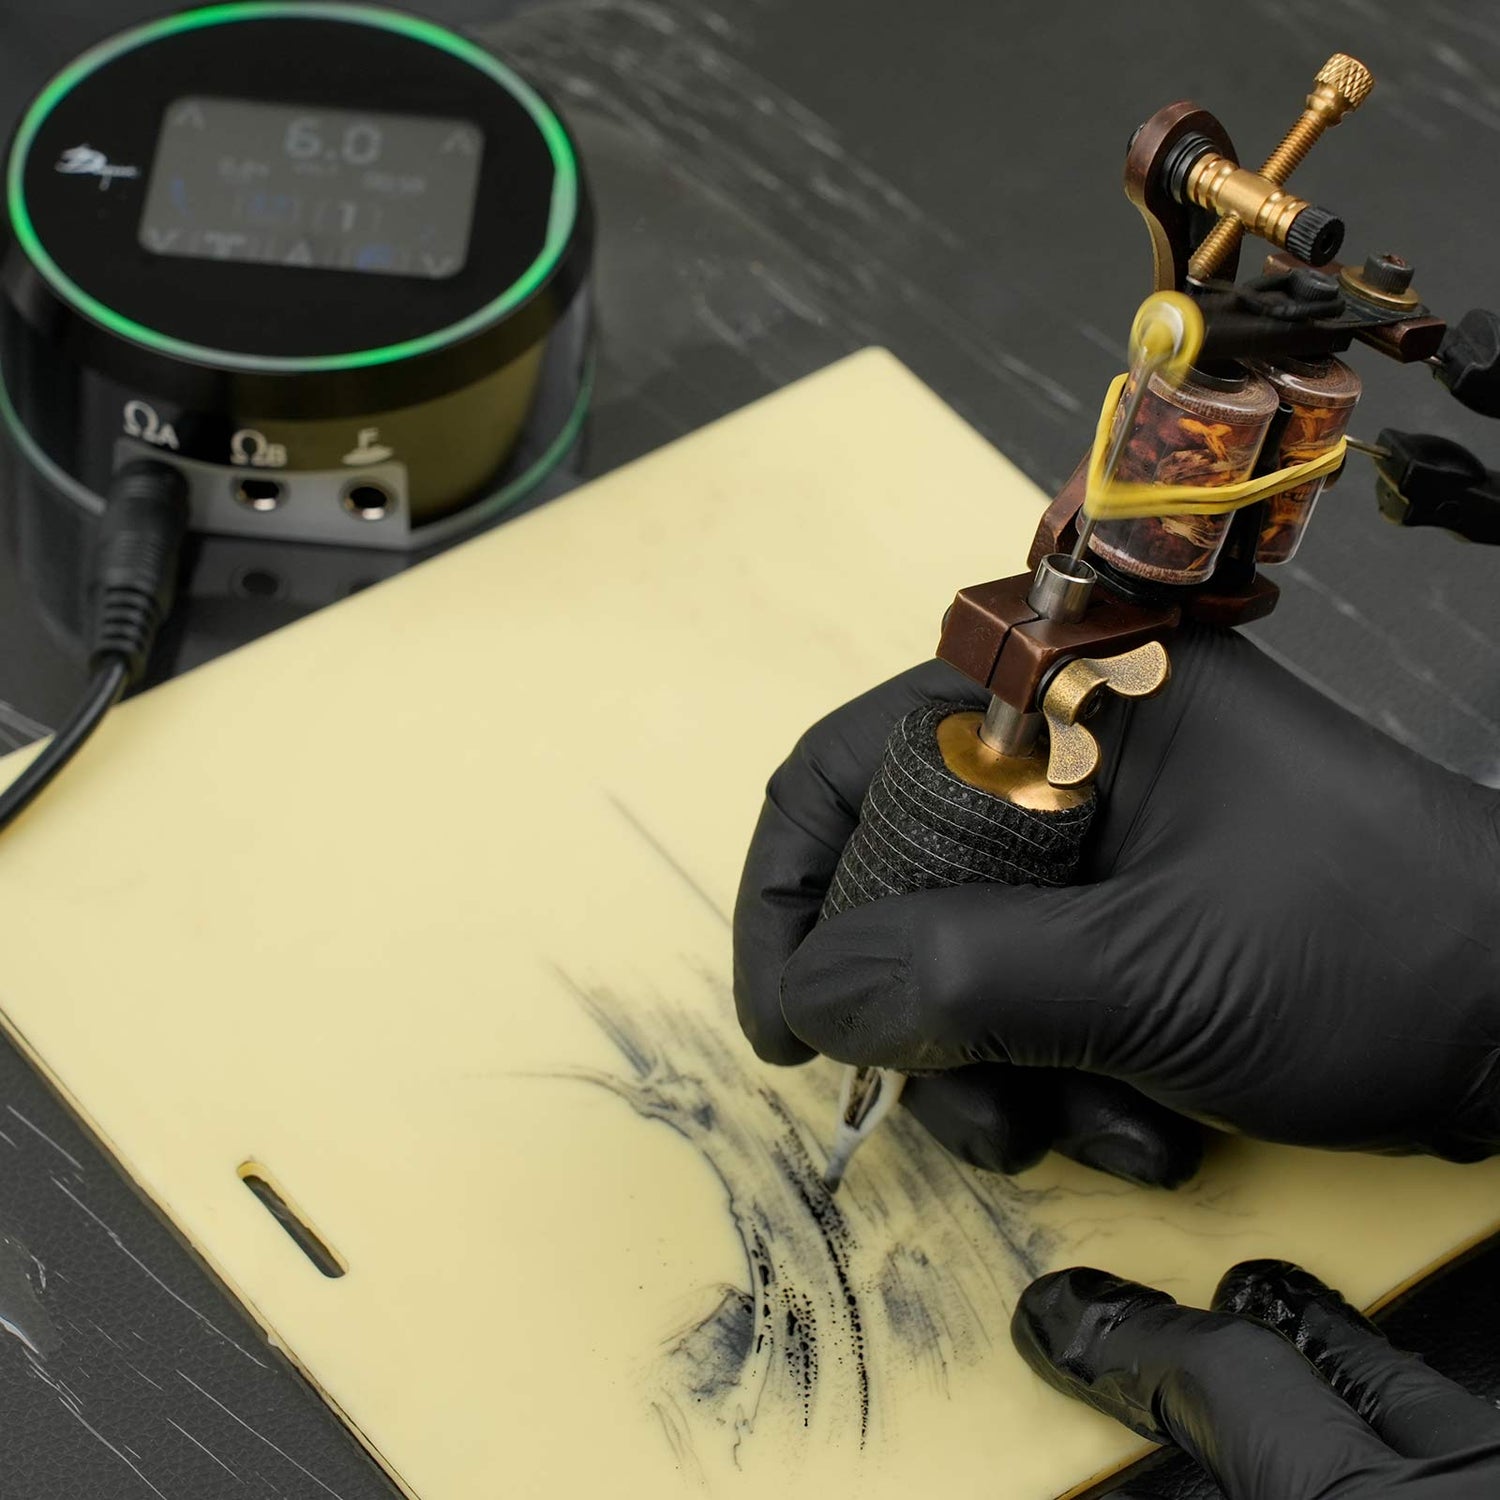 A tattoo artist uses a Dragoart aurora tattoo power supply and a coil machine to do dotwork tattoos on fake skin.